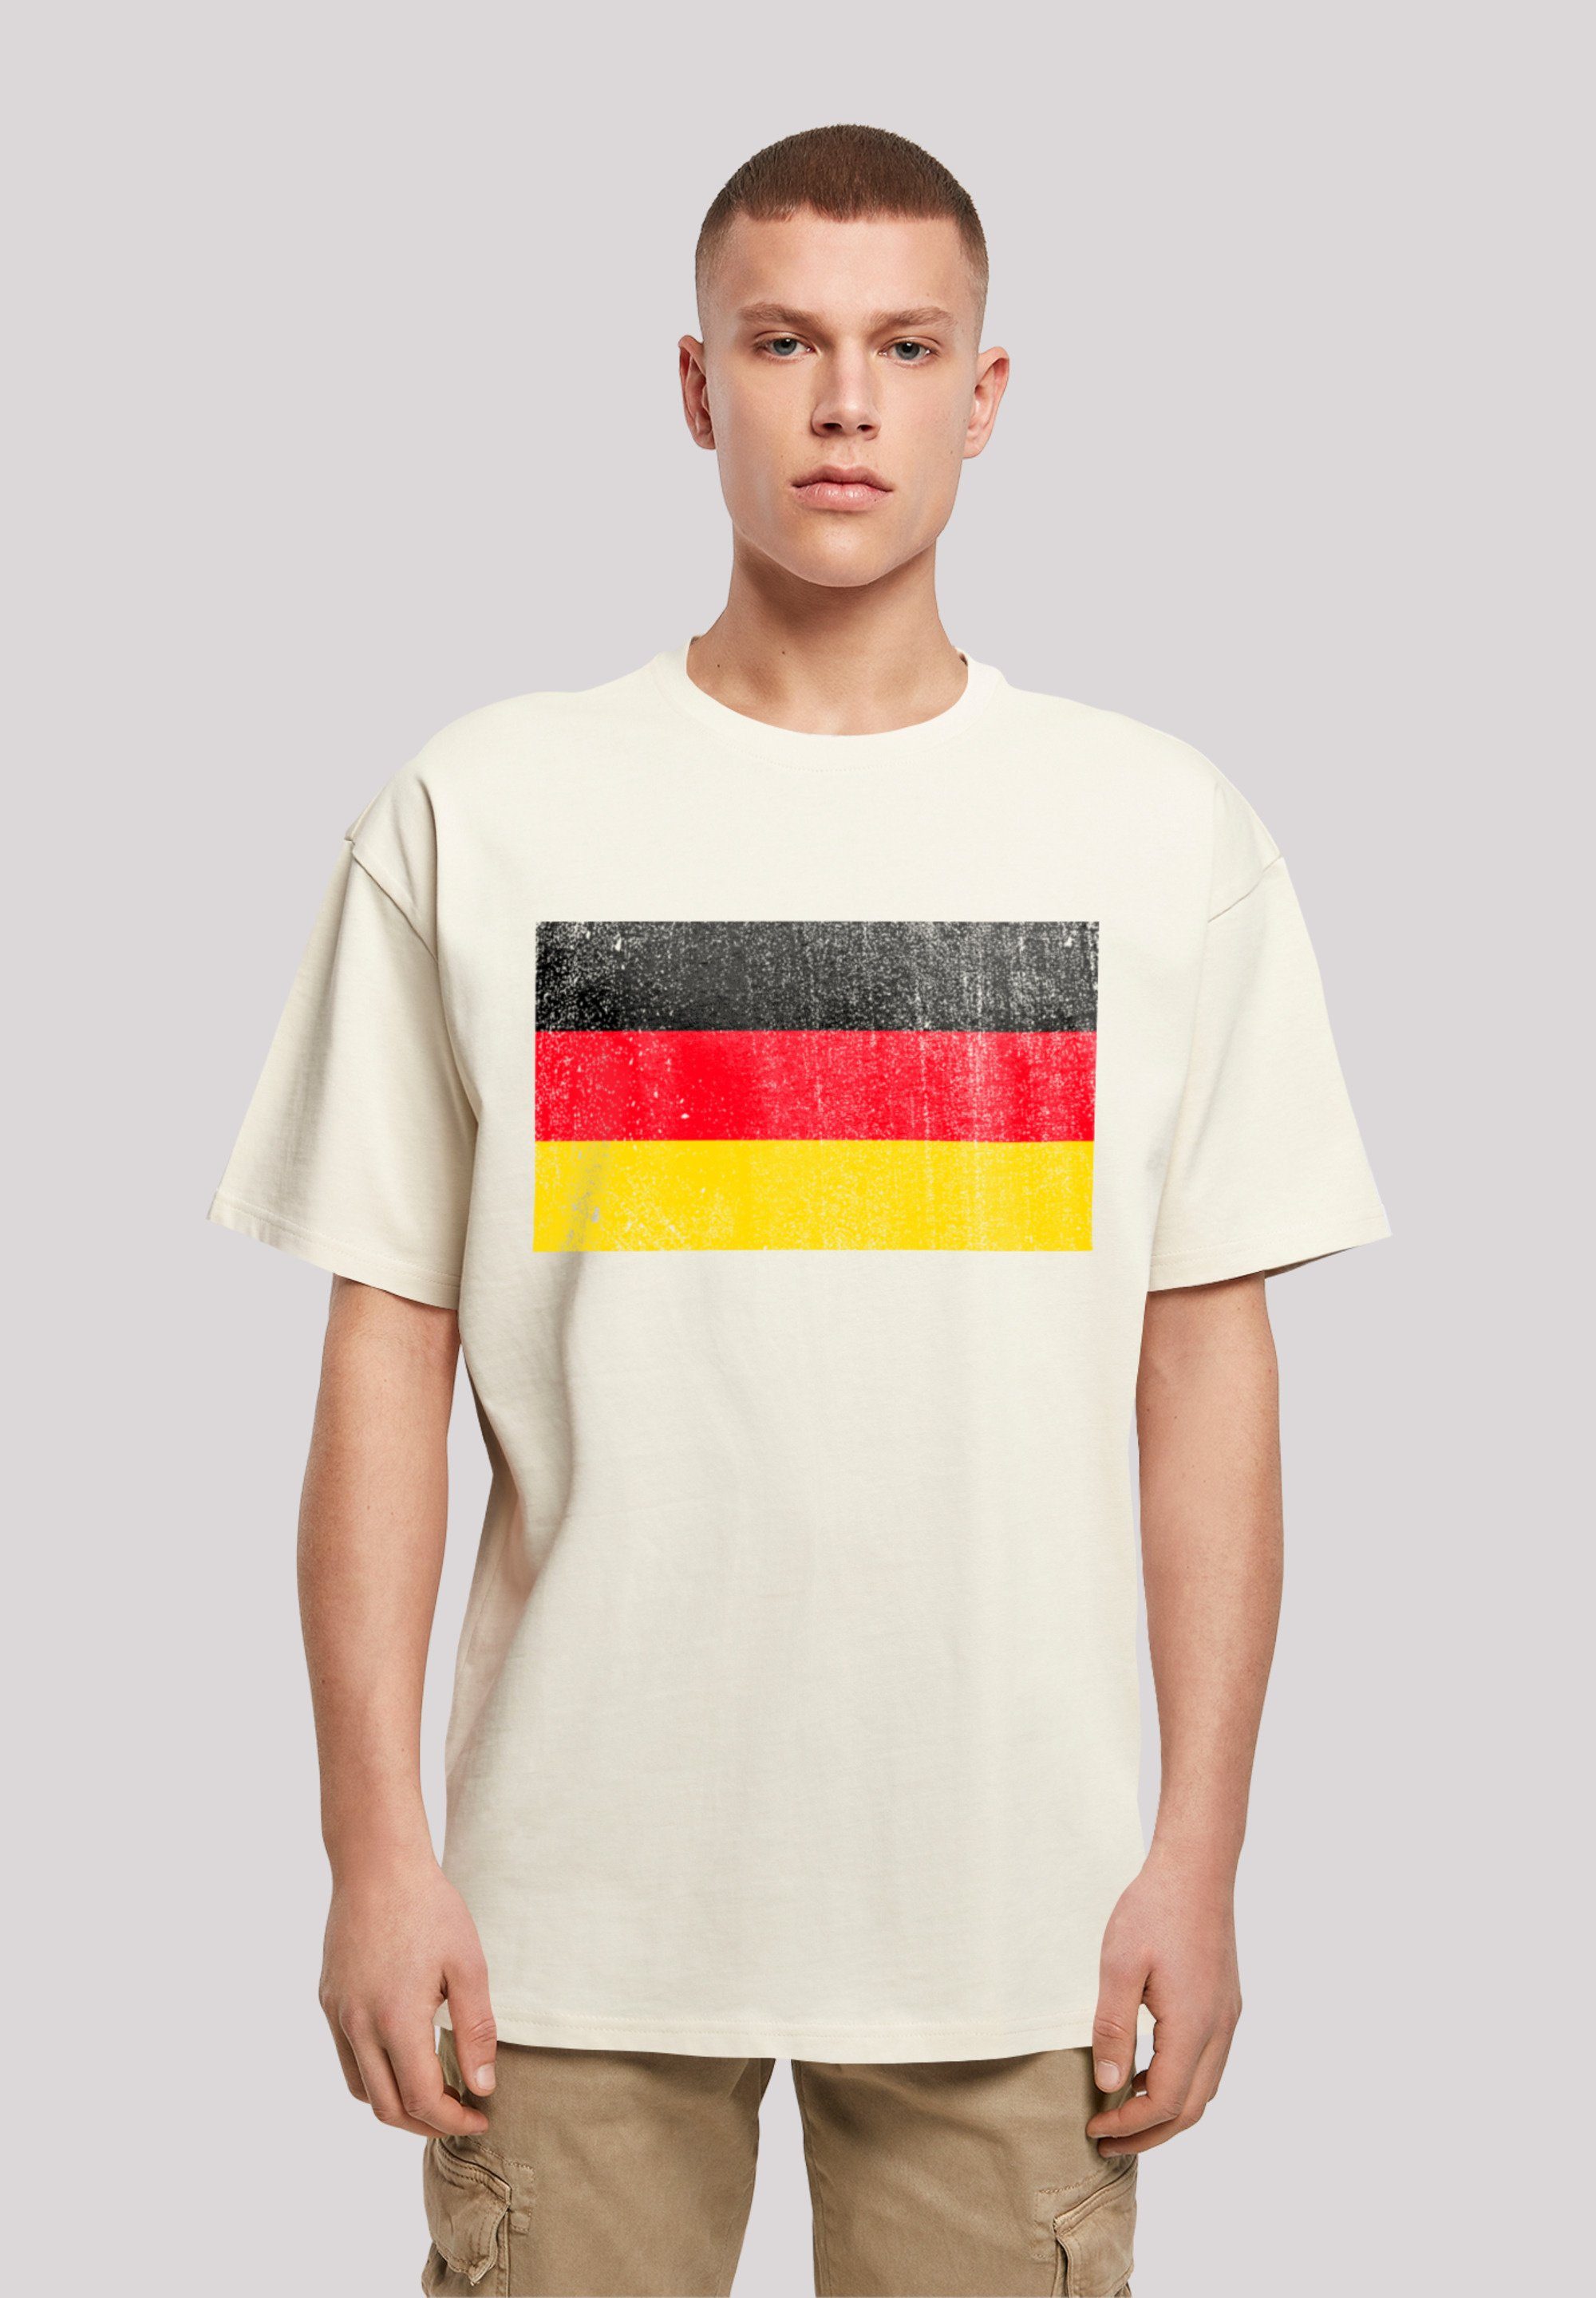 F4NT4STIC T-Shirt Germany Deutschland Flagge distressed Print sand